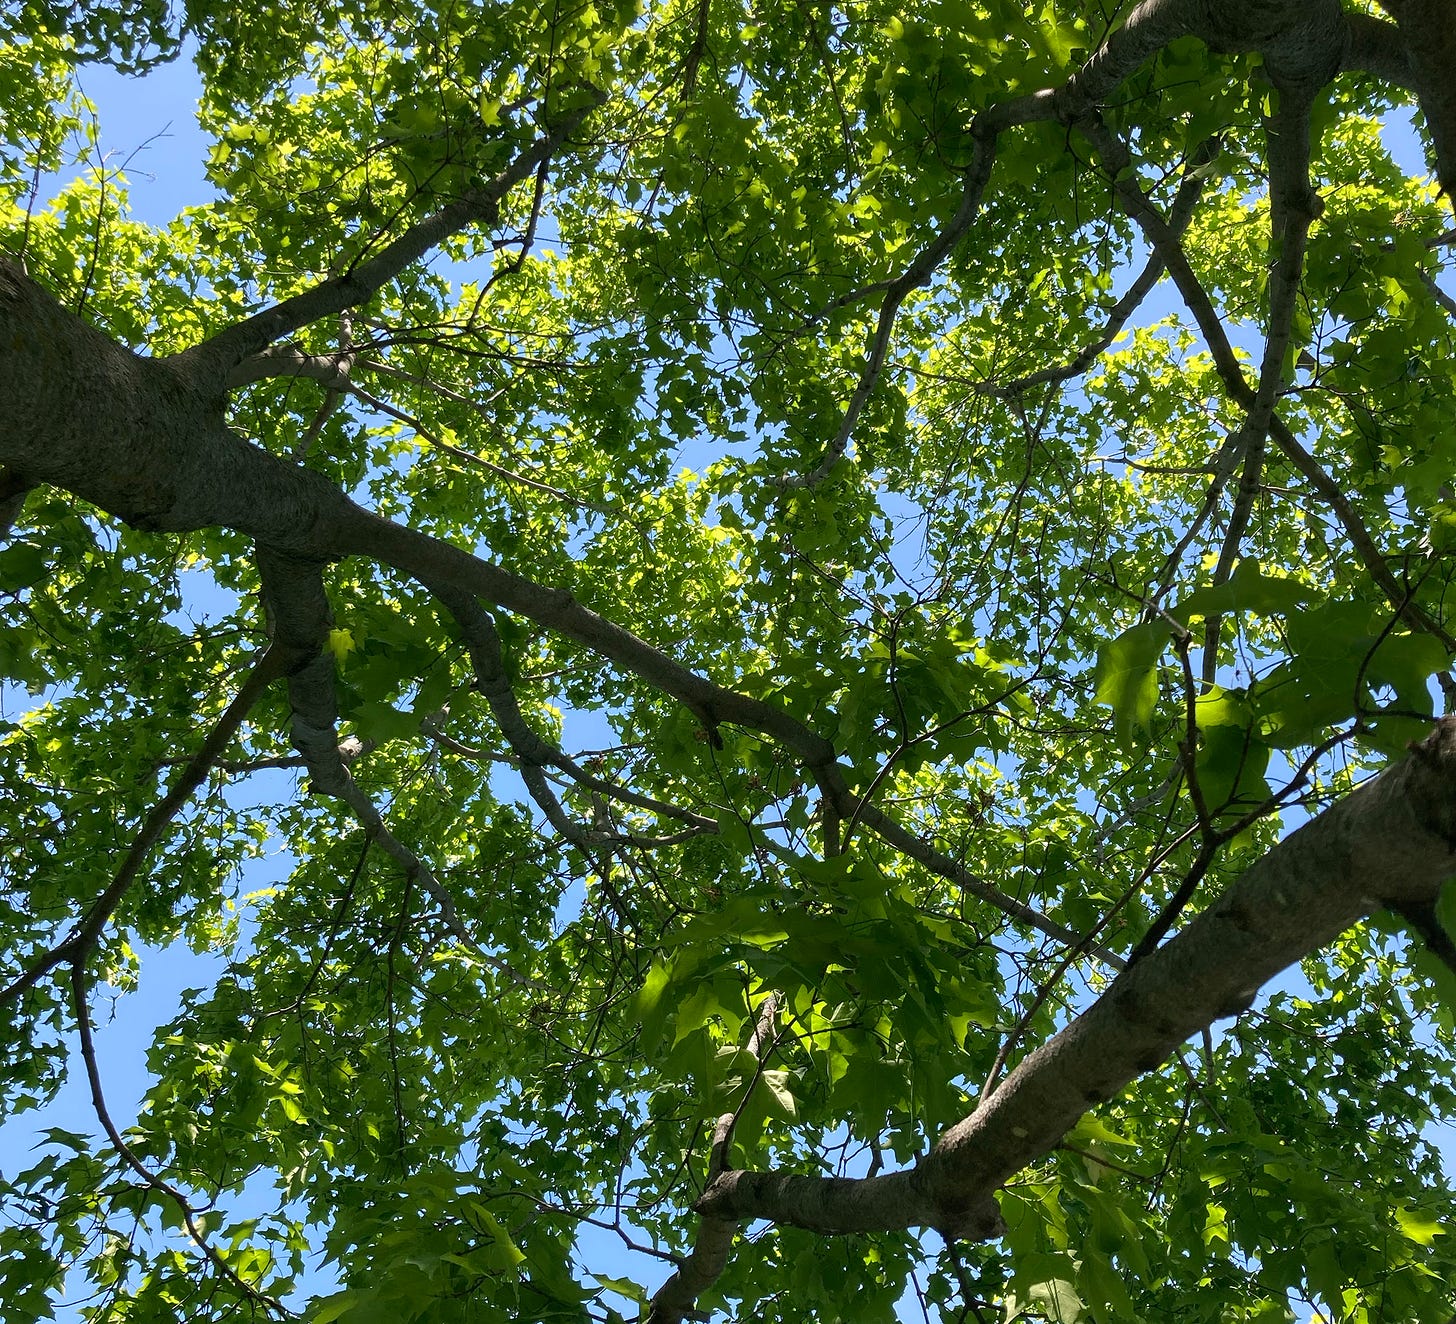 A green canopy overhead